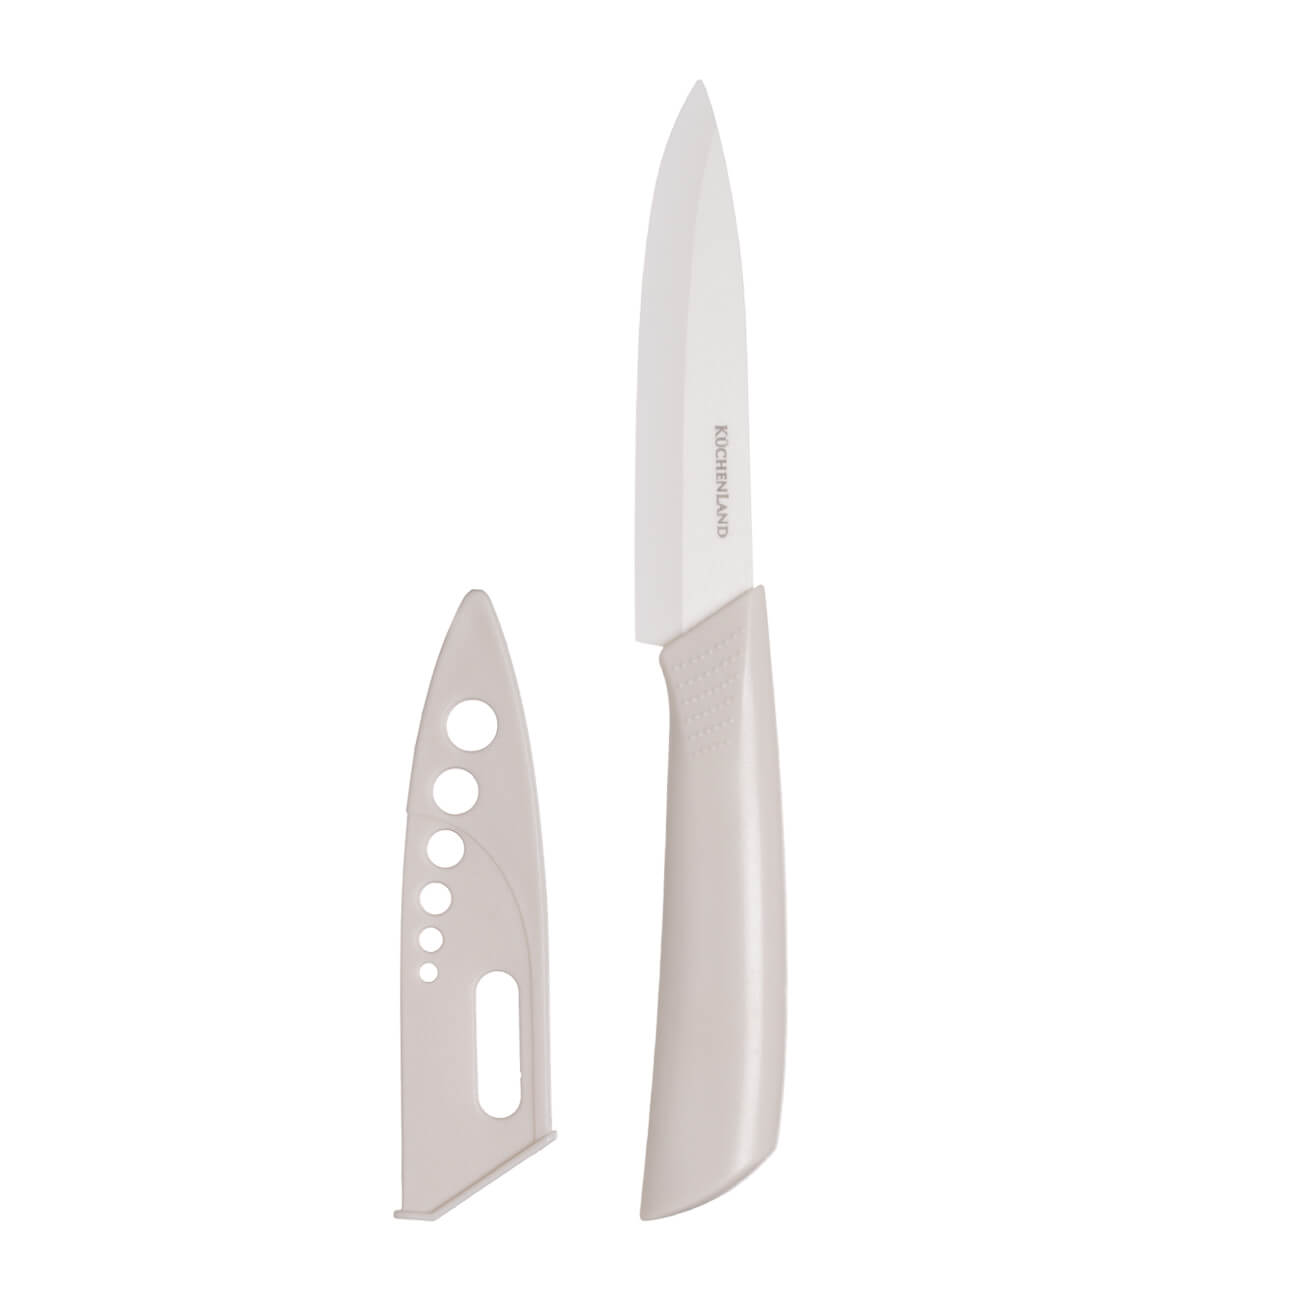 Нож для нарезки, 13 см, с чехлом, керамика/пластик, молочный, Regular ножницы для резки пластика tdm